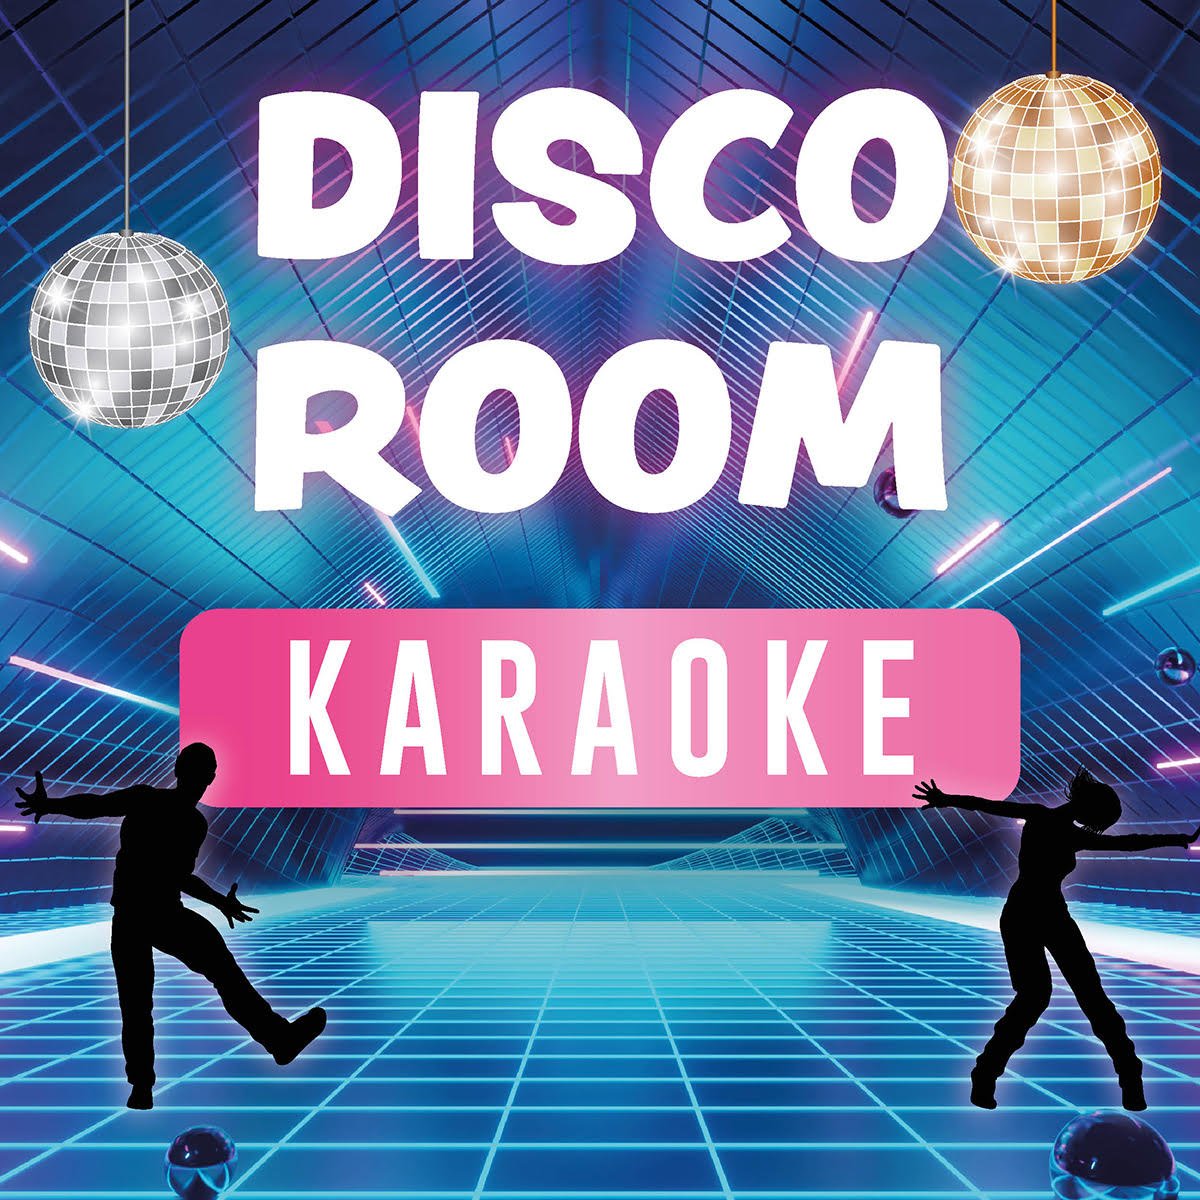 karaoke bar amsterdam disco room.jpg